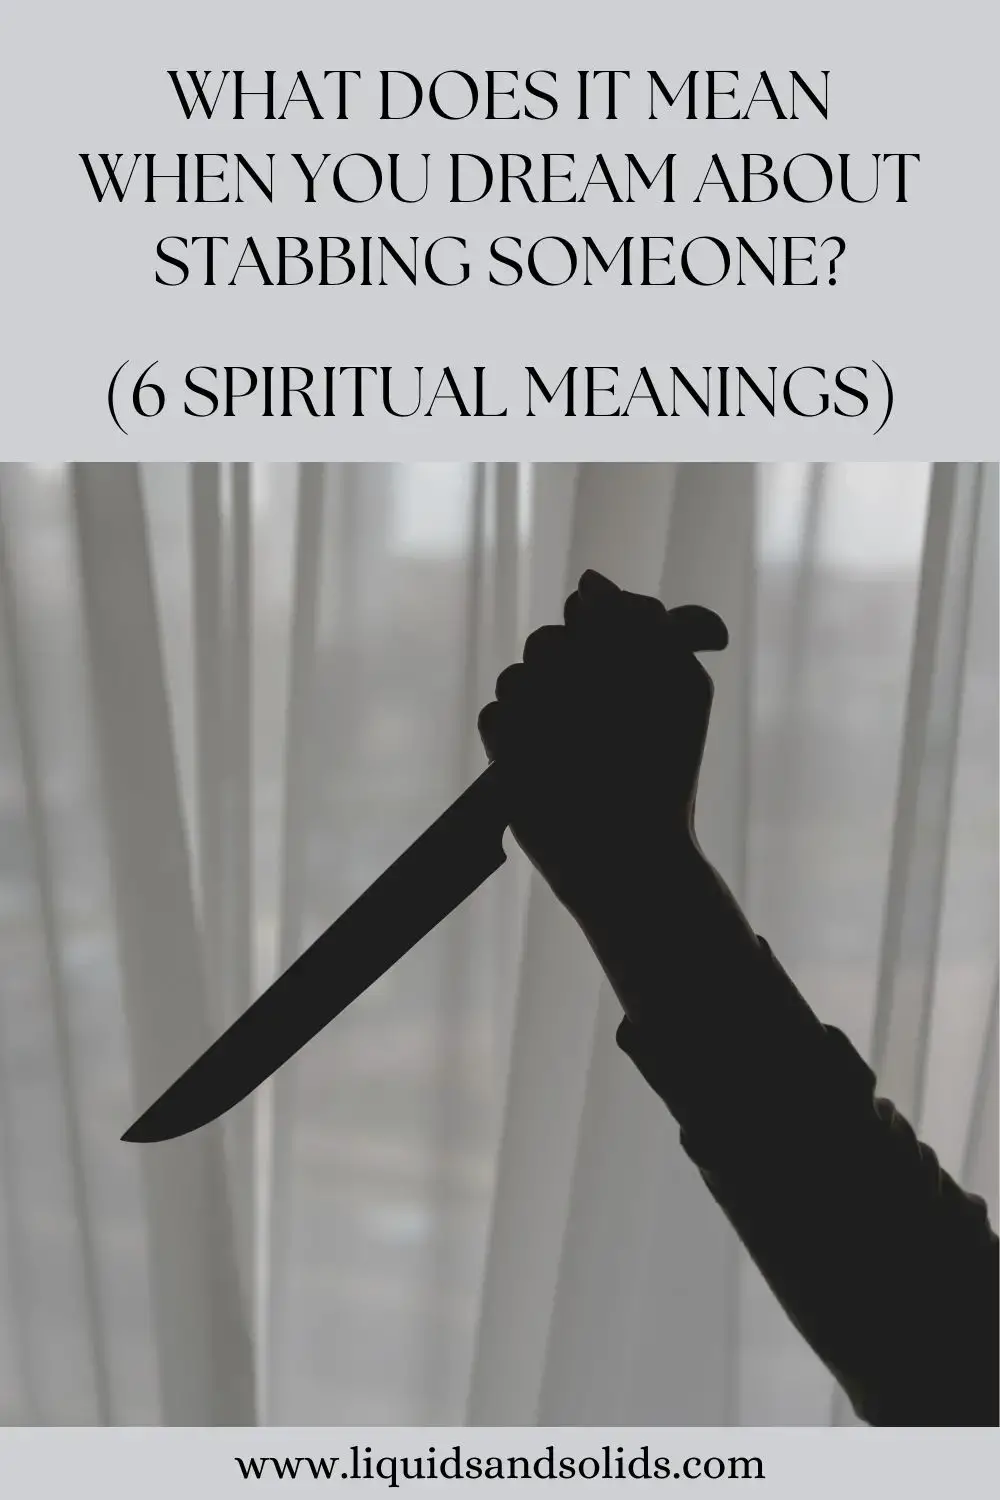 4. Stabbing